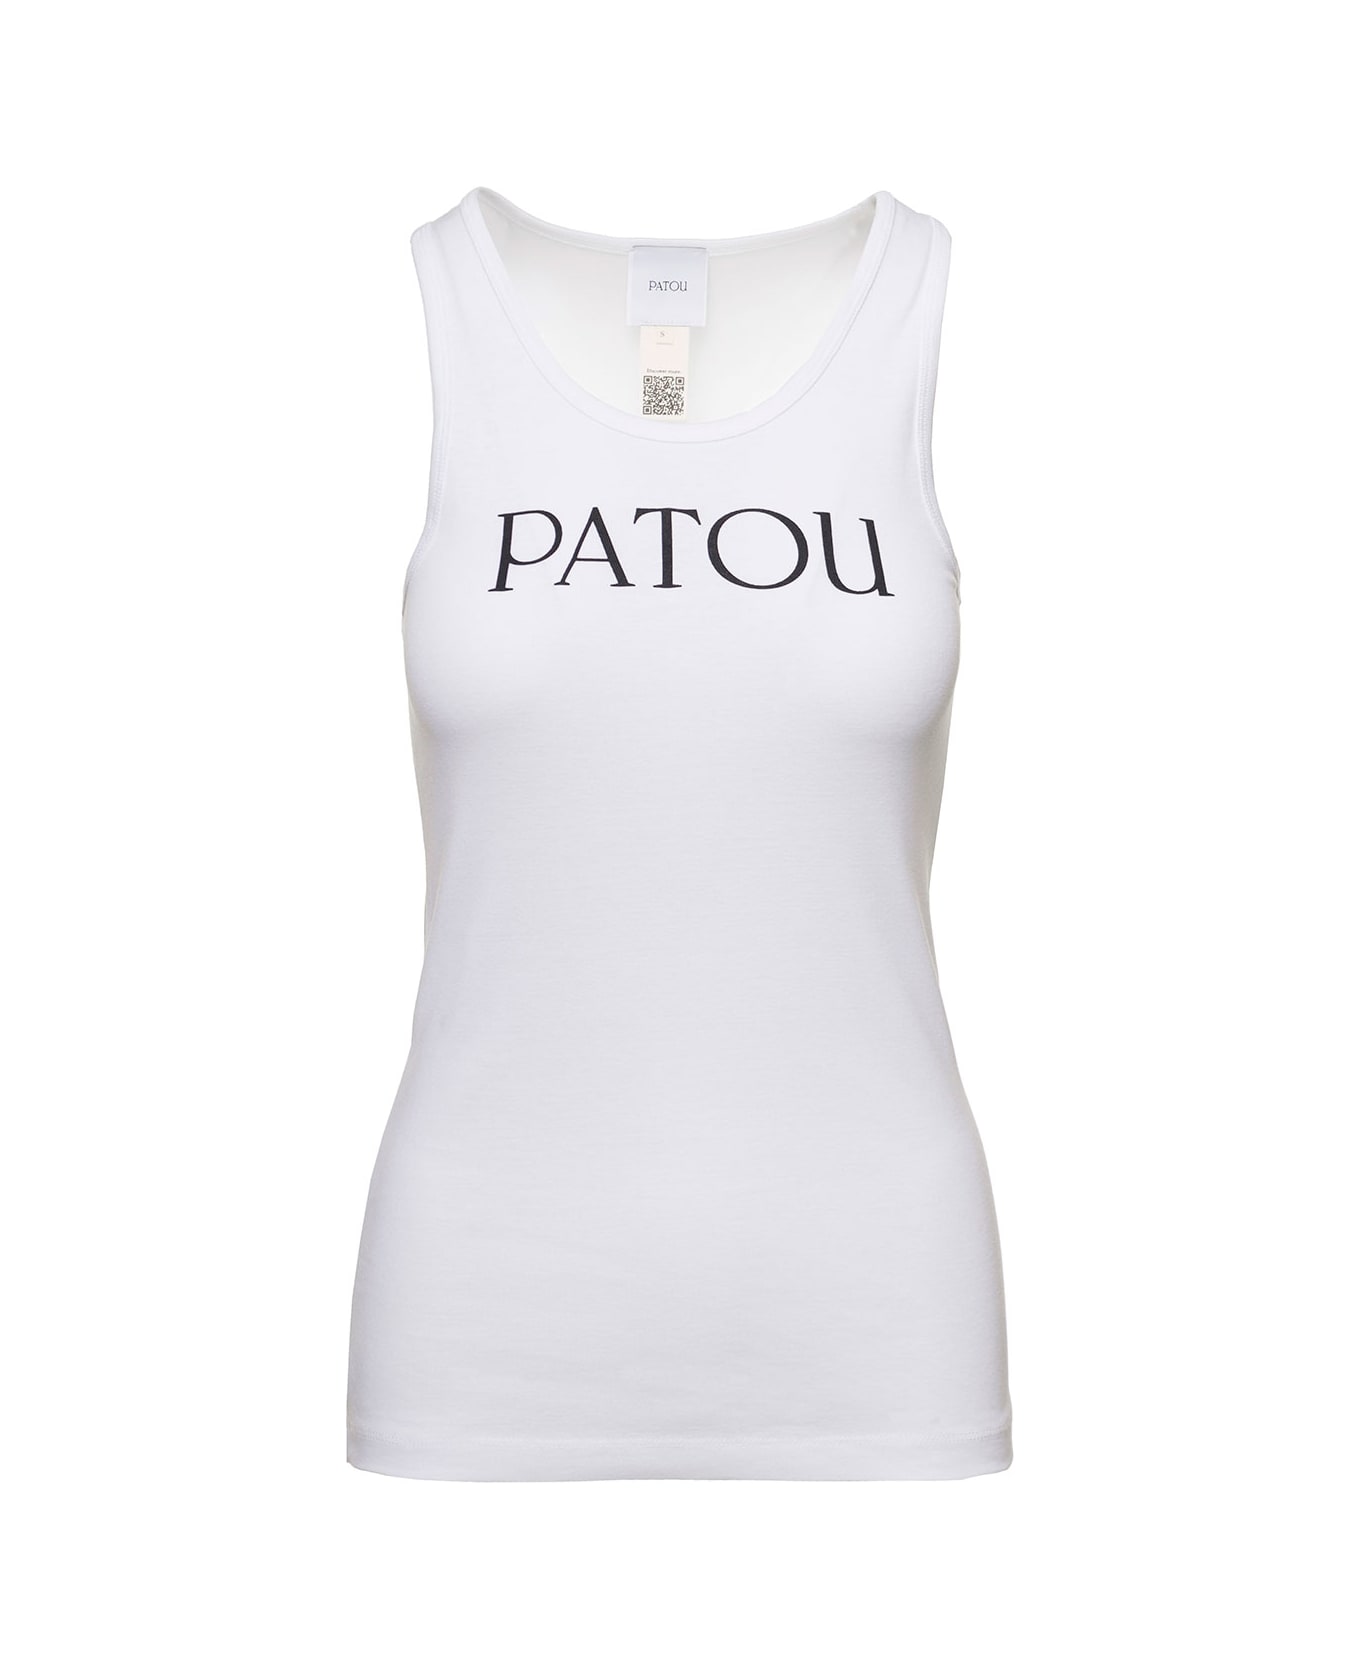 Patou Iconic Tank Top - Bianco